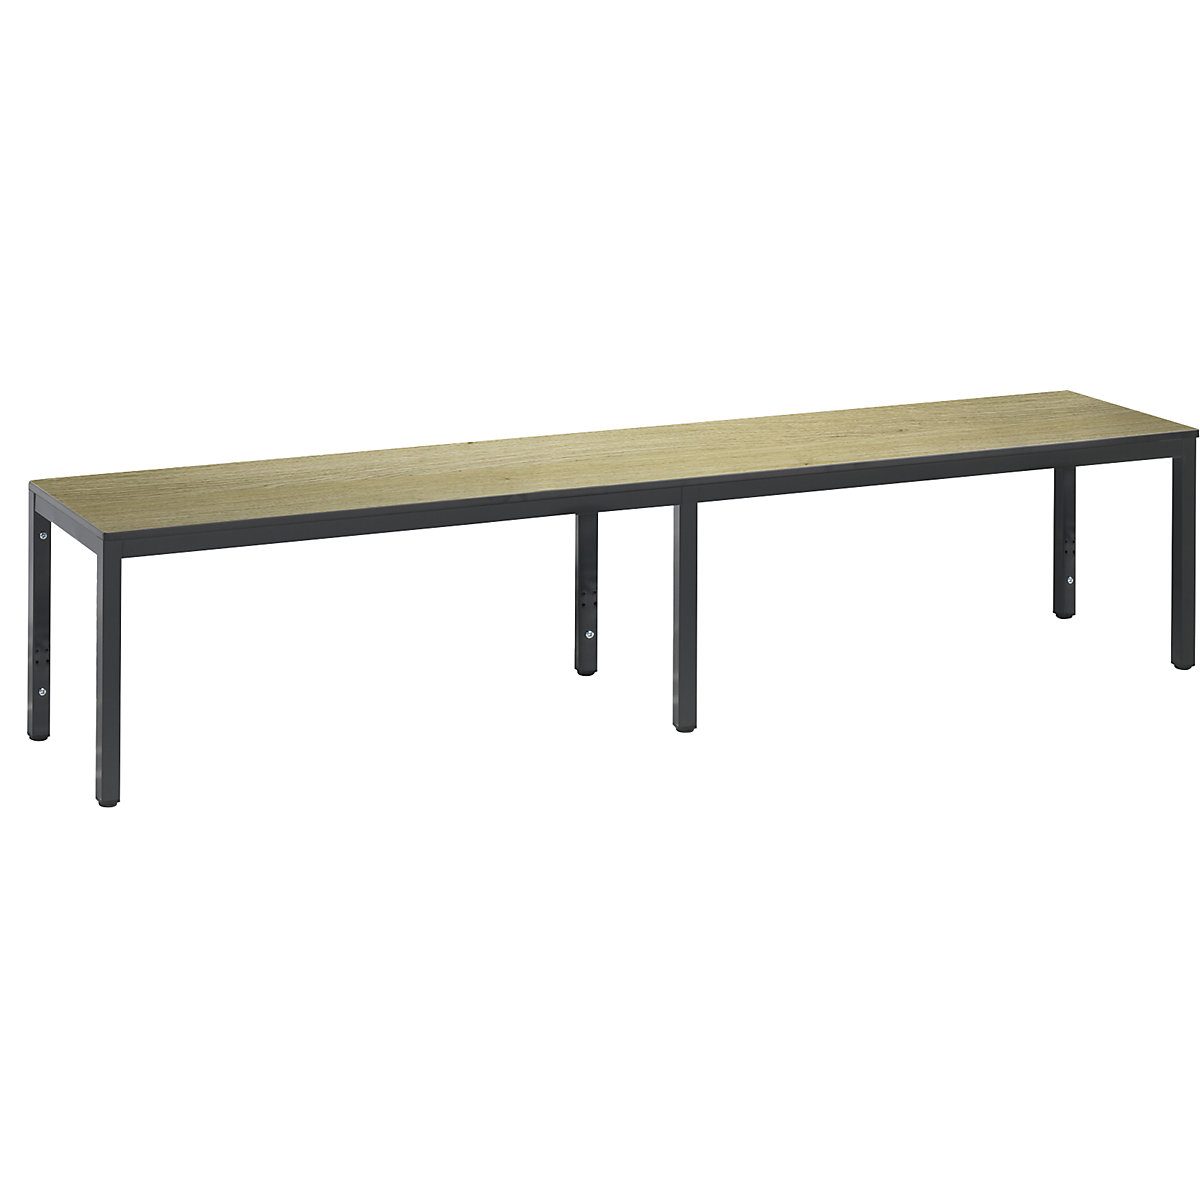 BASIC PLUS cloakroom bench – C+P, HPL seat surface, length 1960 mm, oak finish-4